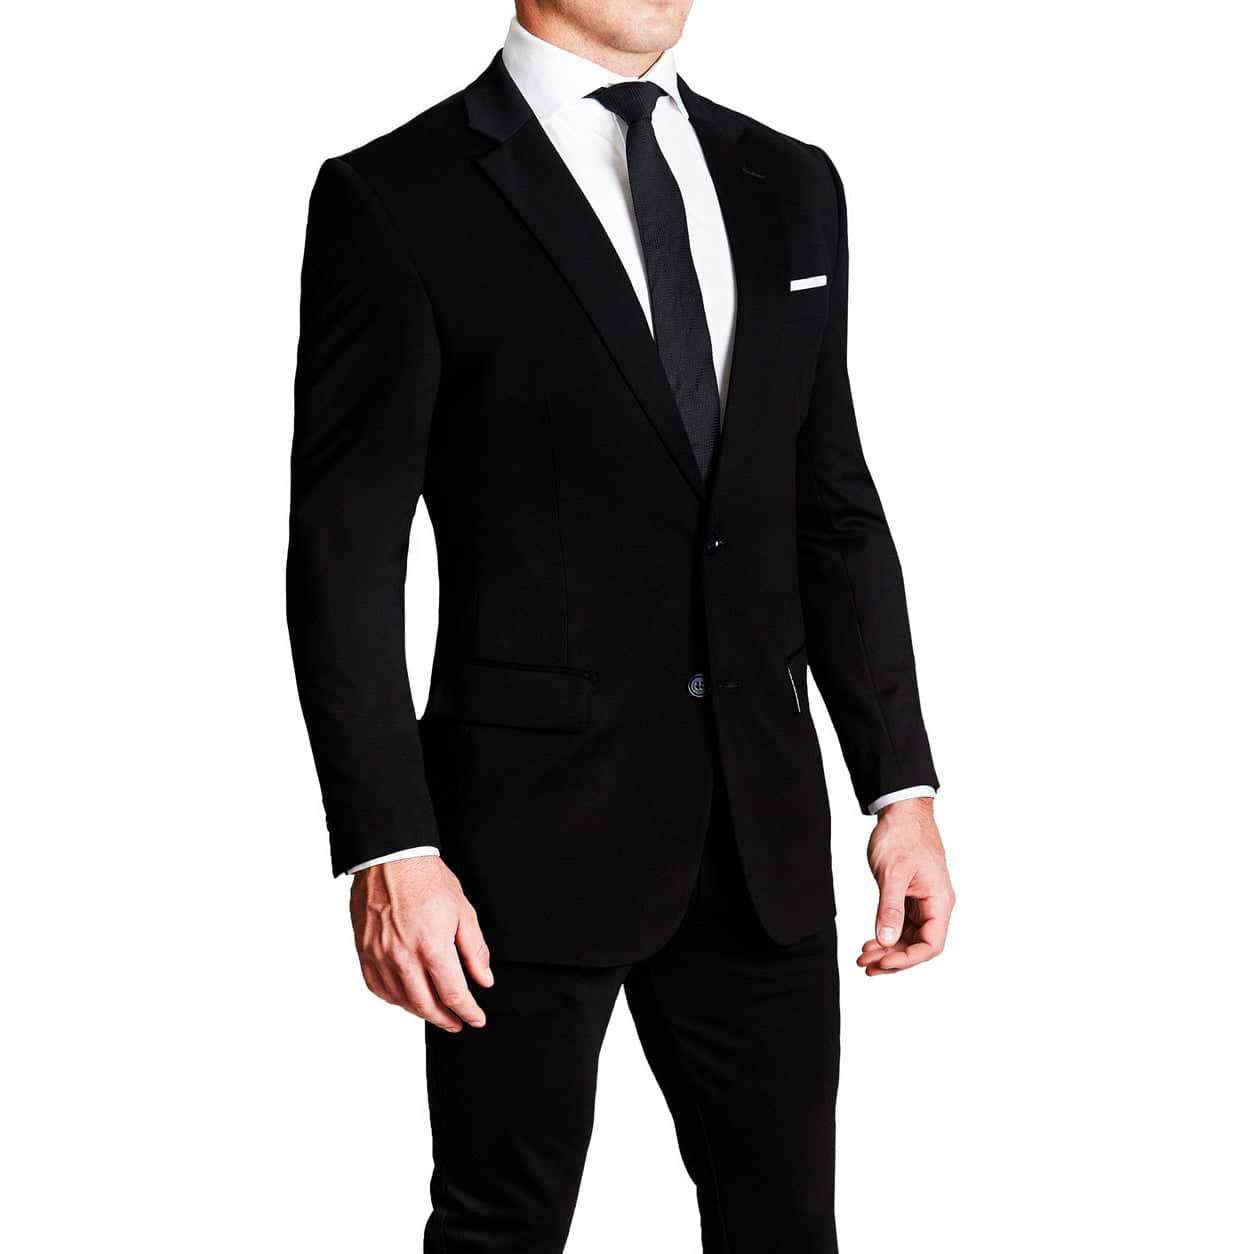 Ultra Slim Stretch Tailored Pant - Black, Suit Pants